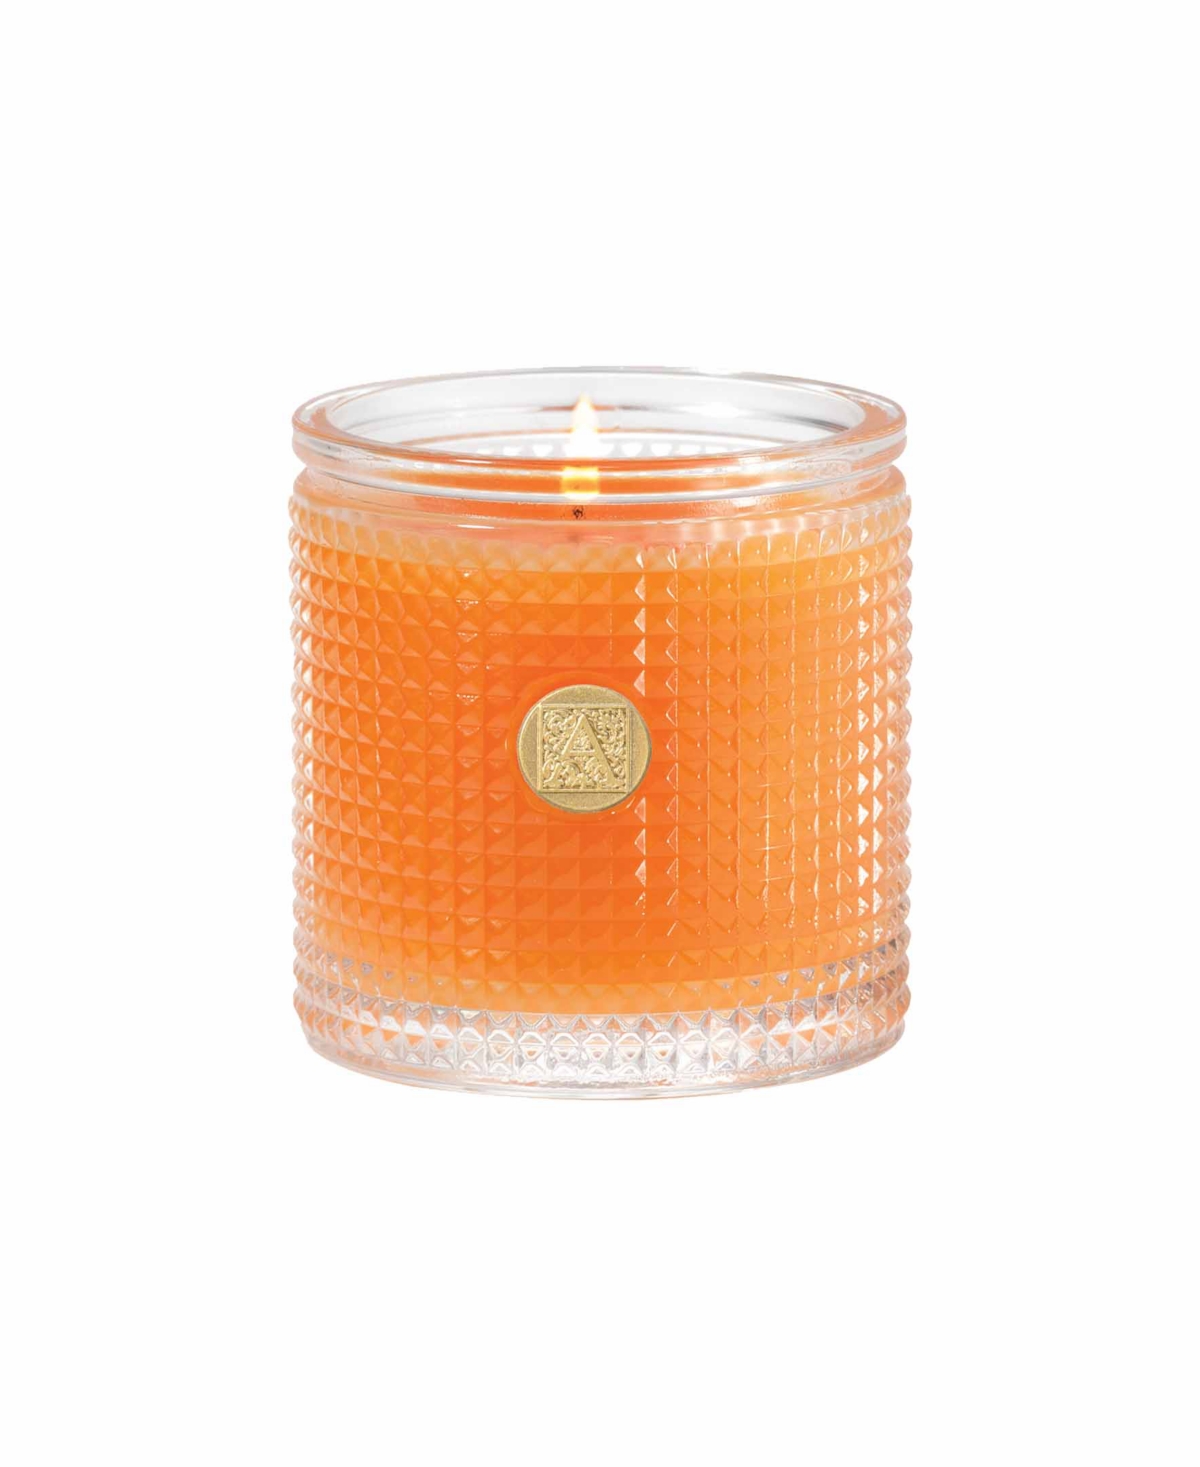 Valencia Orange Textured Candle - Orange